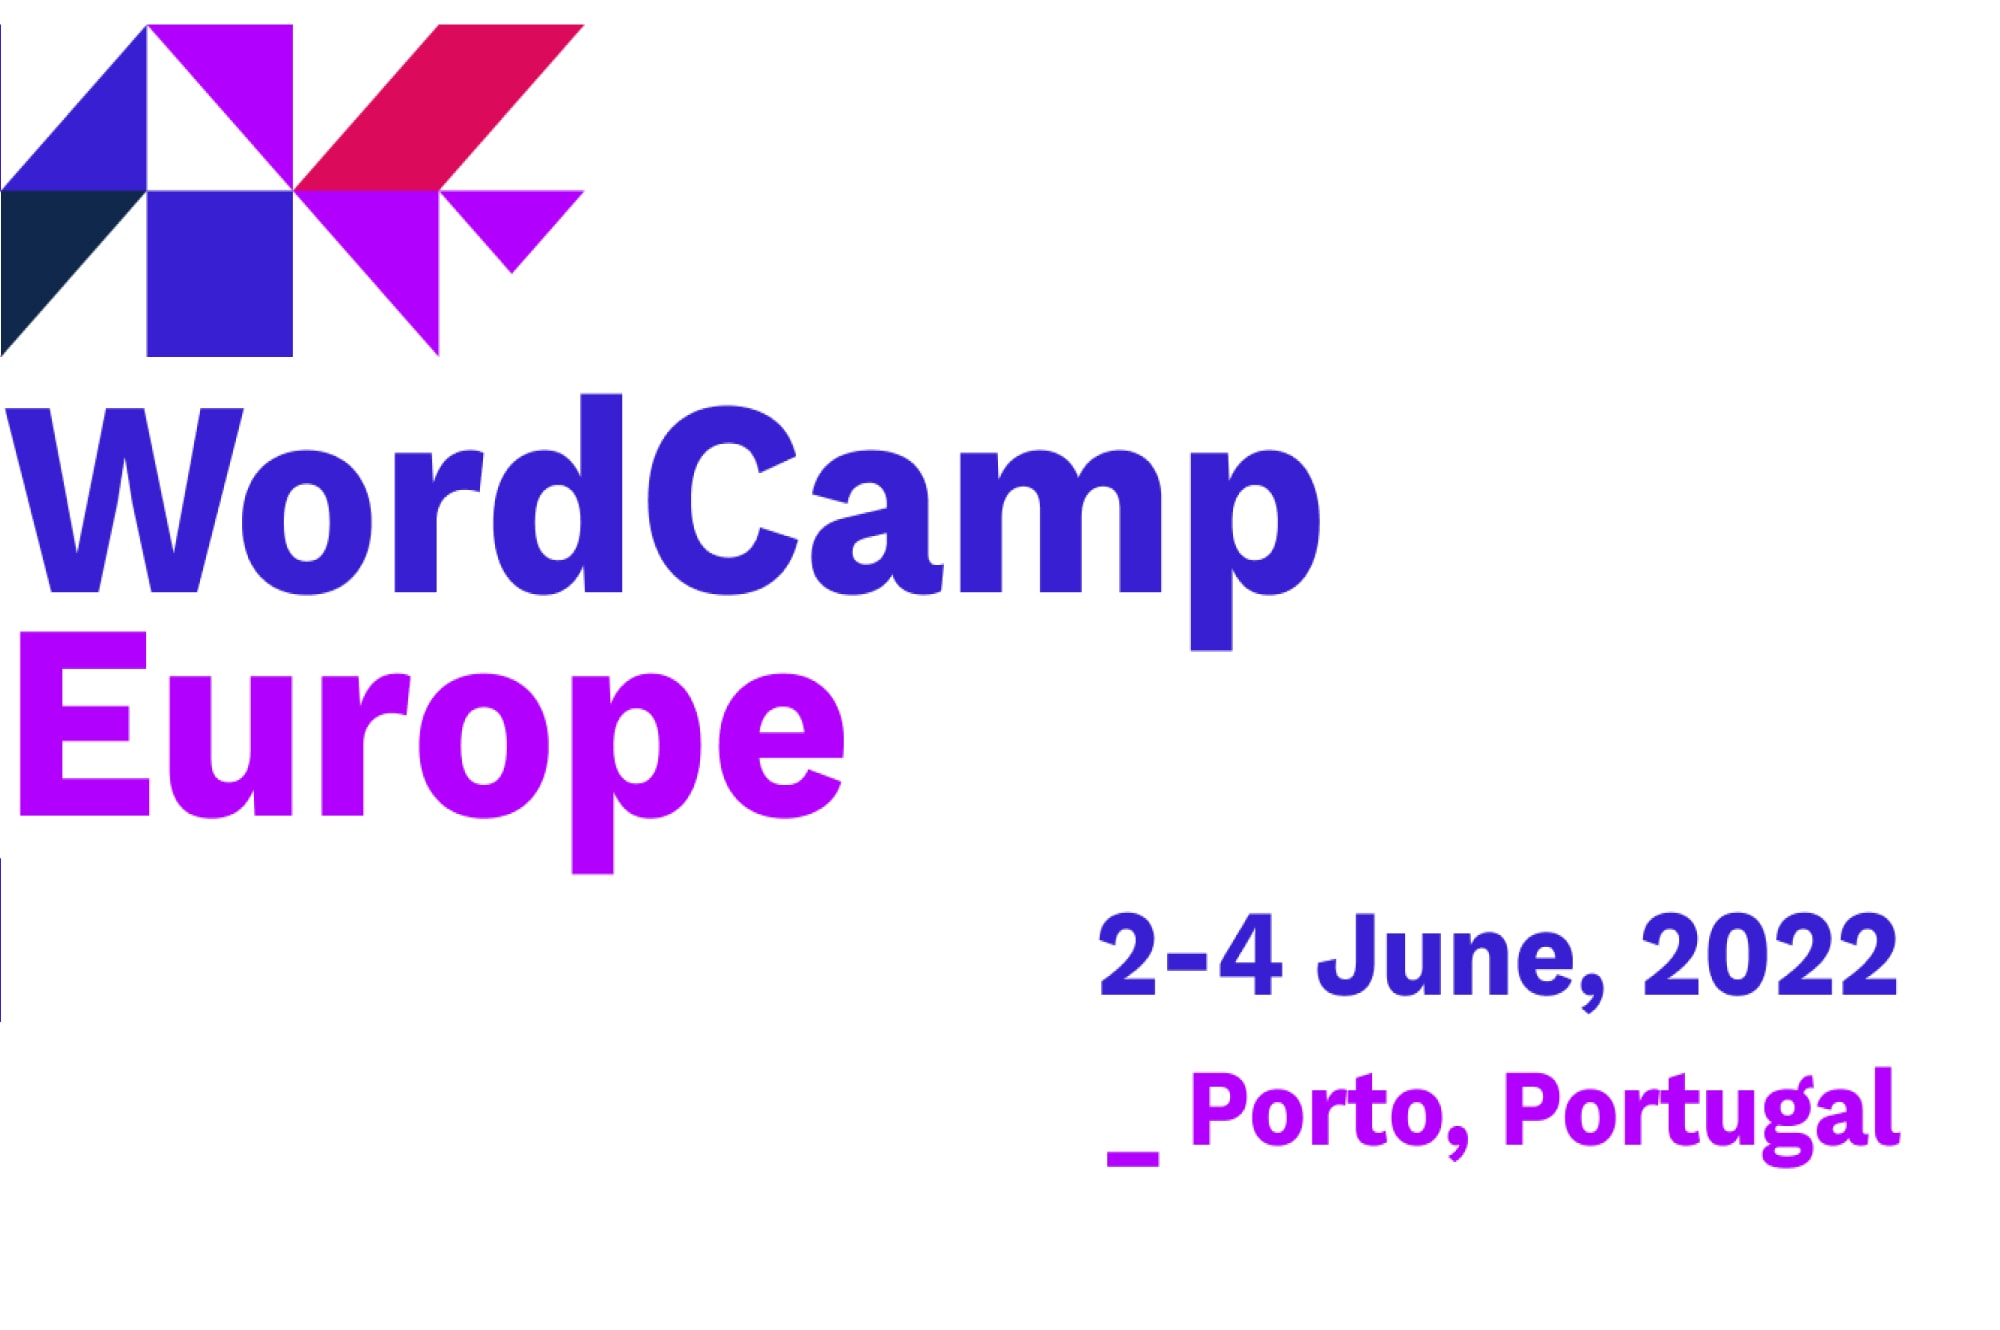 Recap of WordCamp Europe 2022